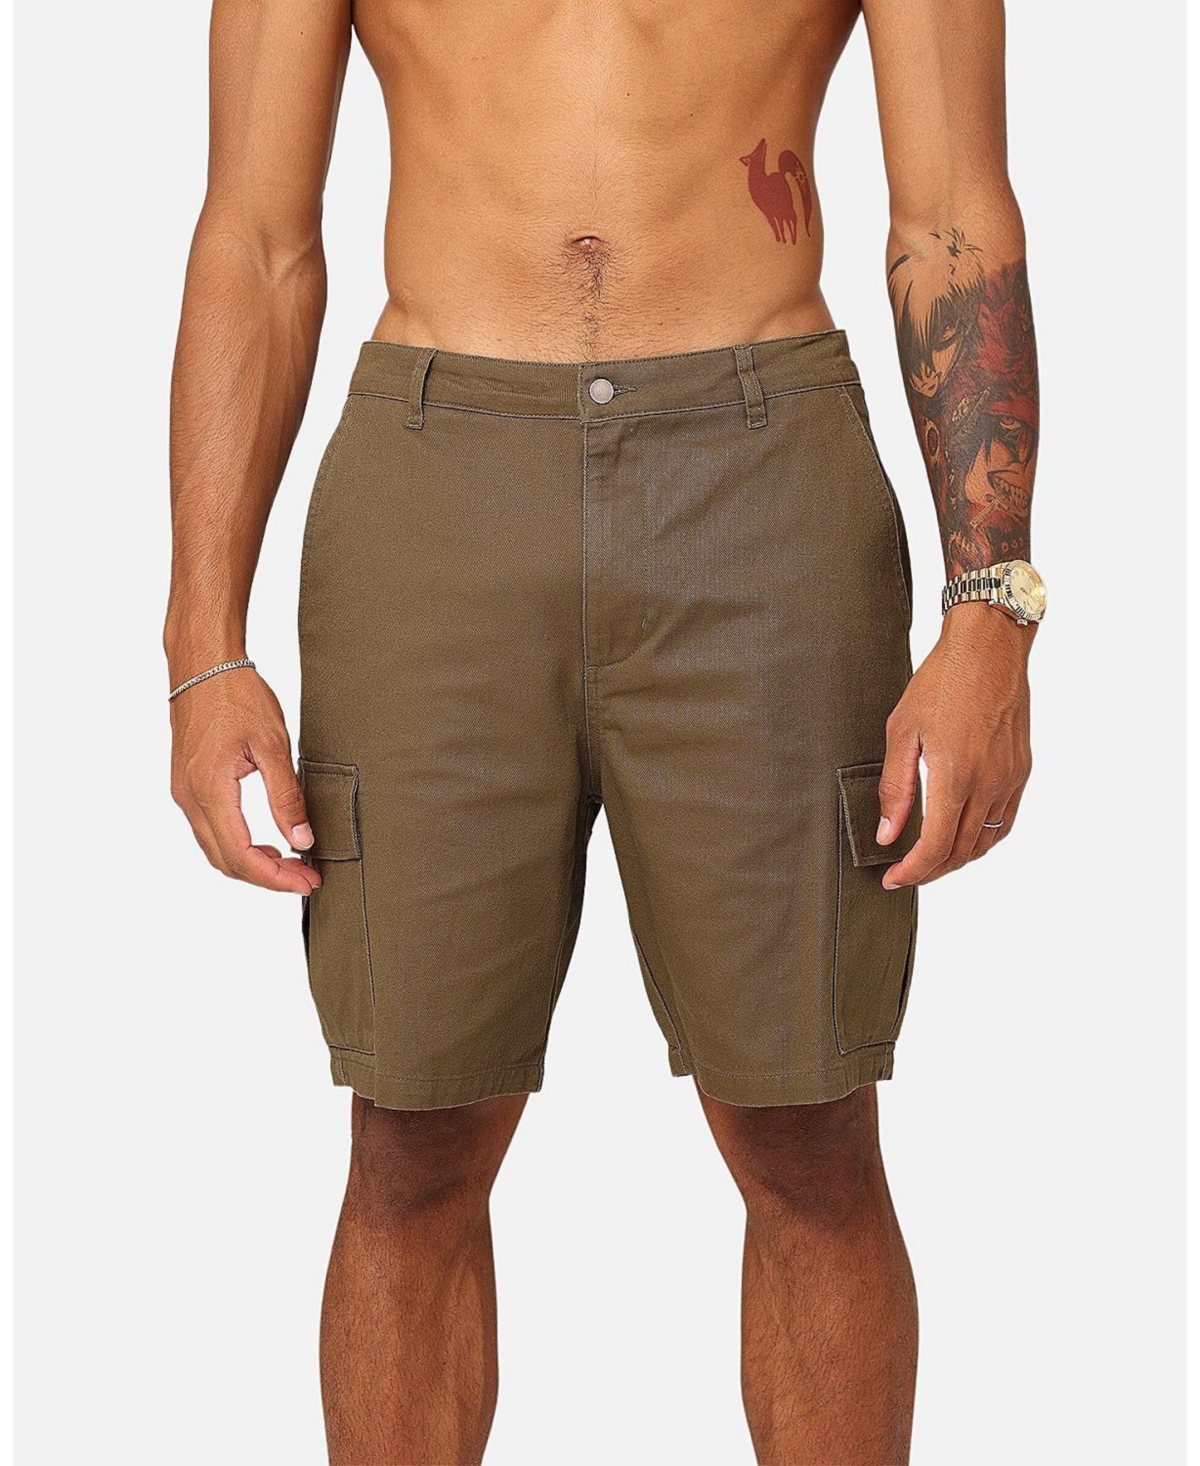 Jordy Men's Cargo Shorts - Brown